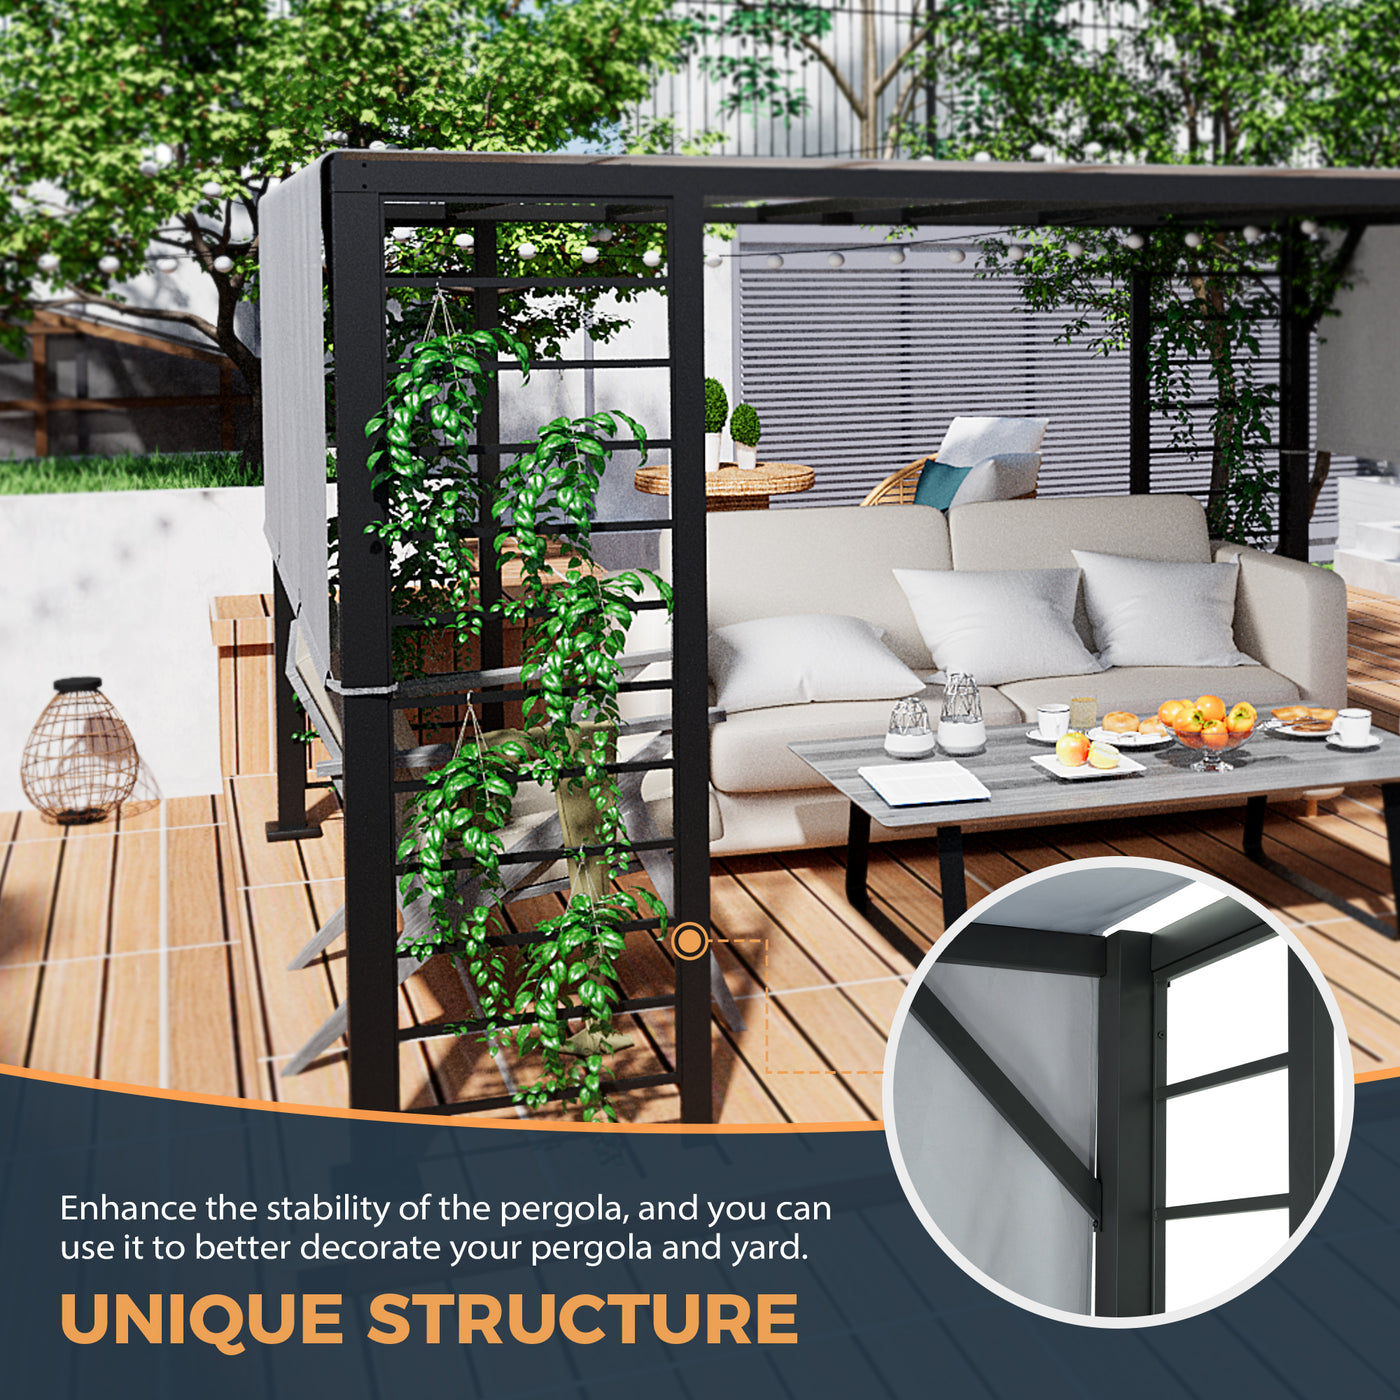 HAPPATIO 10' X 12' Outdoor Pergola, Retractable Pergola Canopy with Adjustable Shade，Aluminum Pergola Shade for Patio, Backyard, Garden